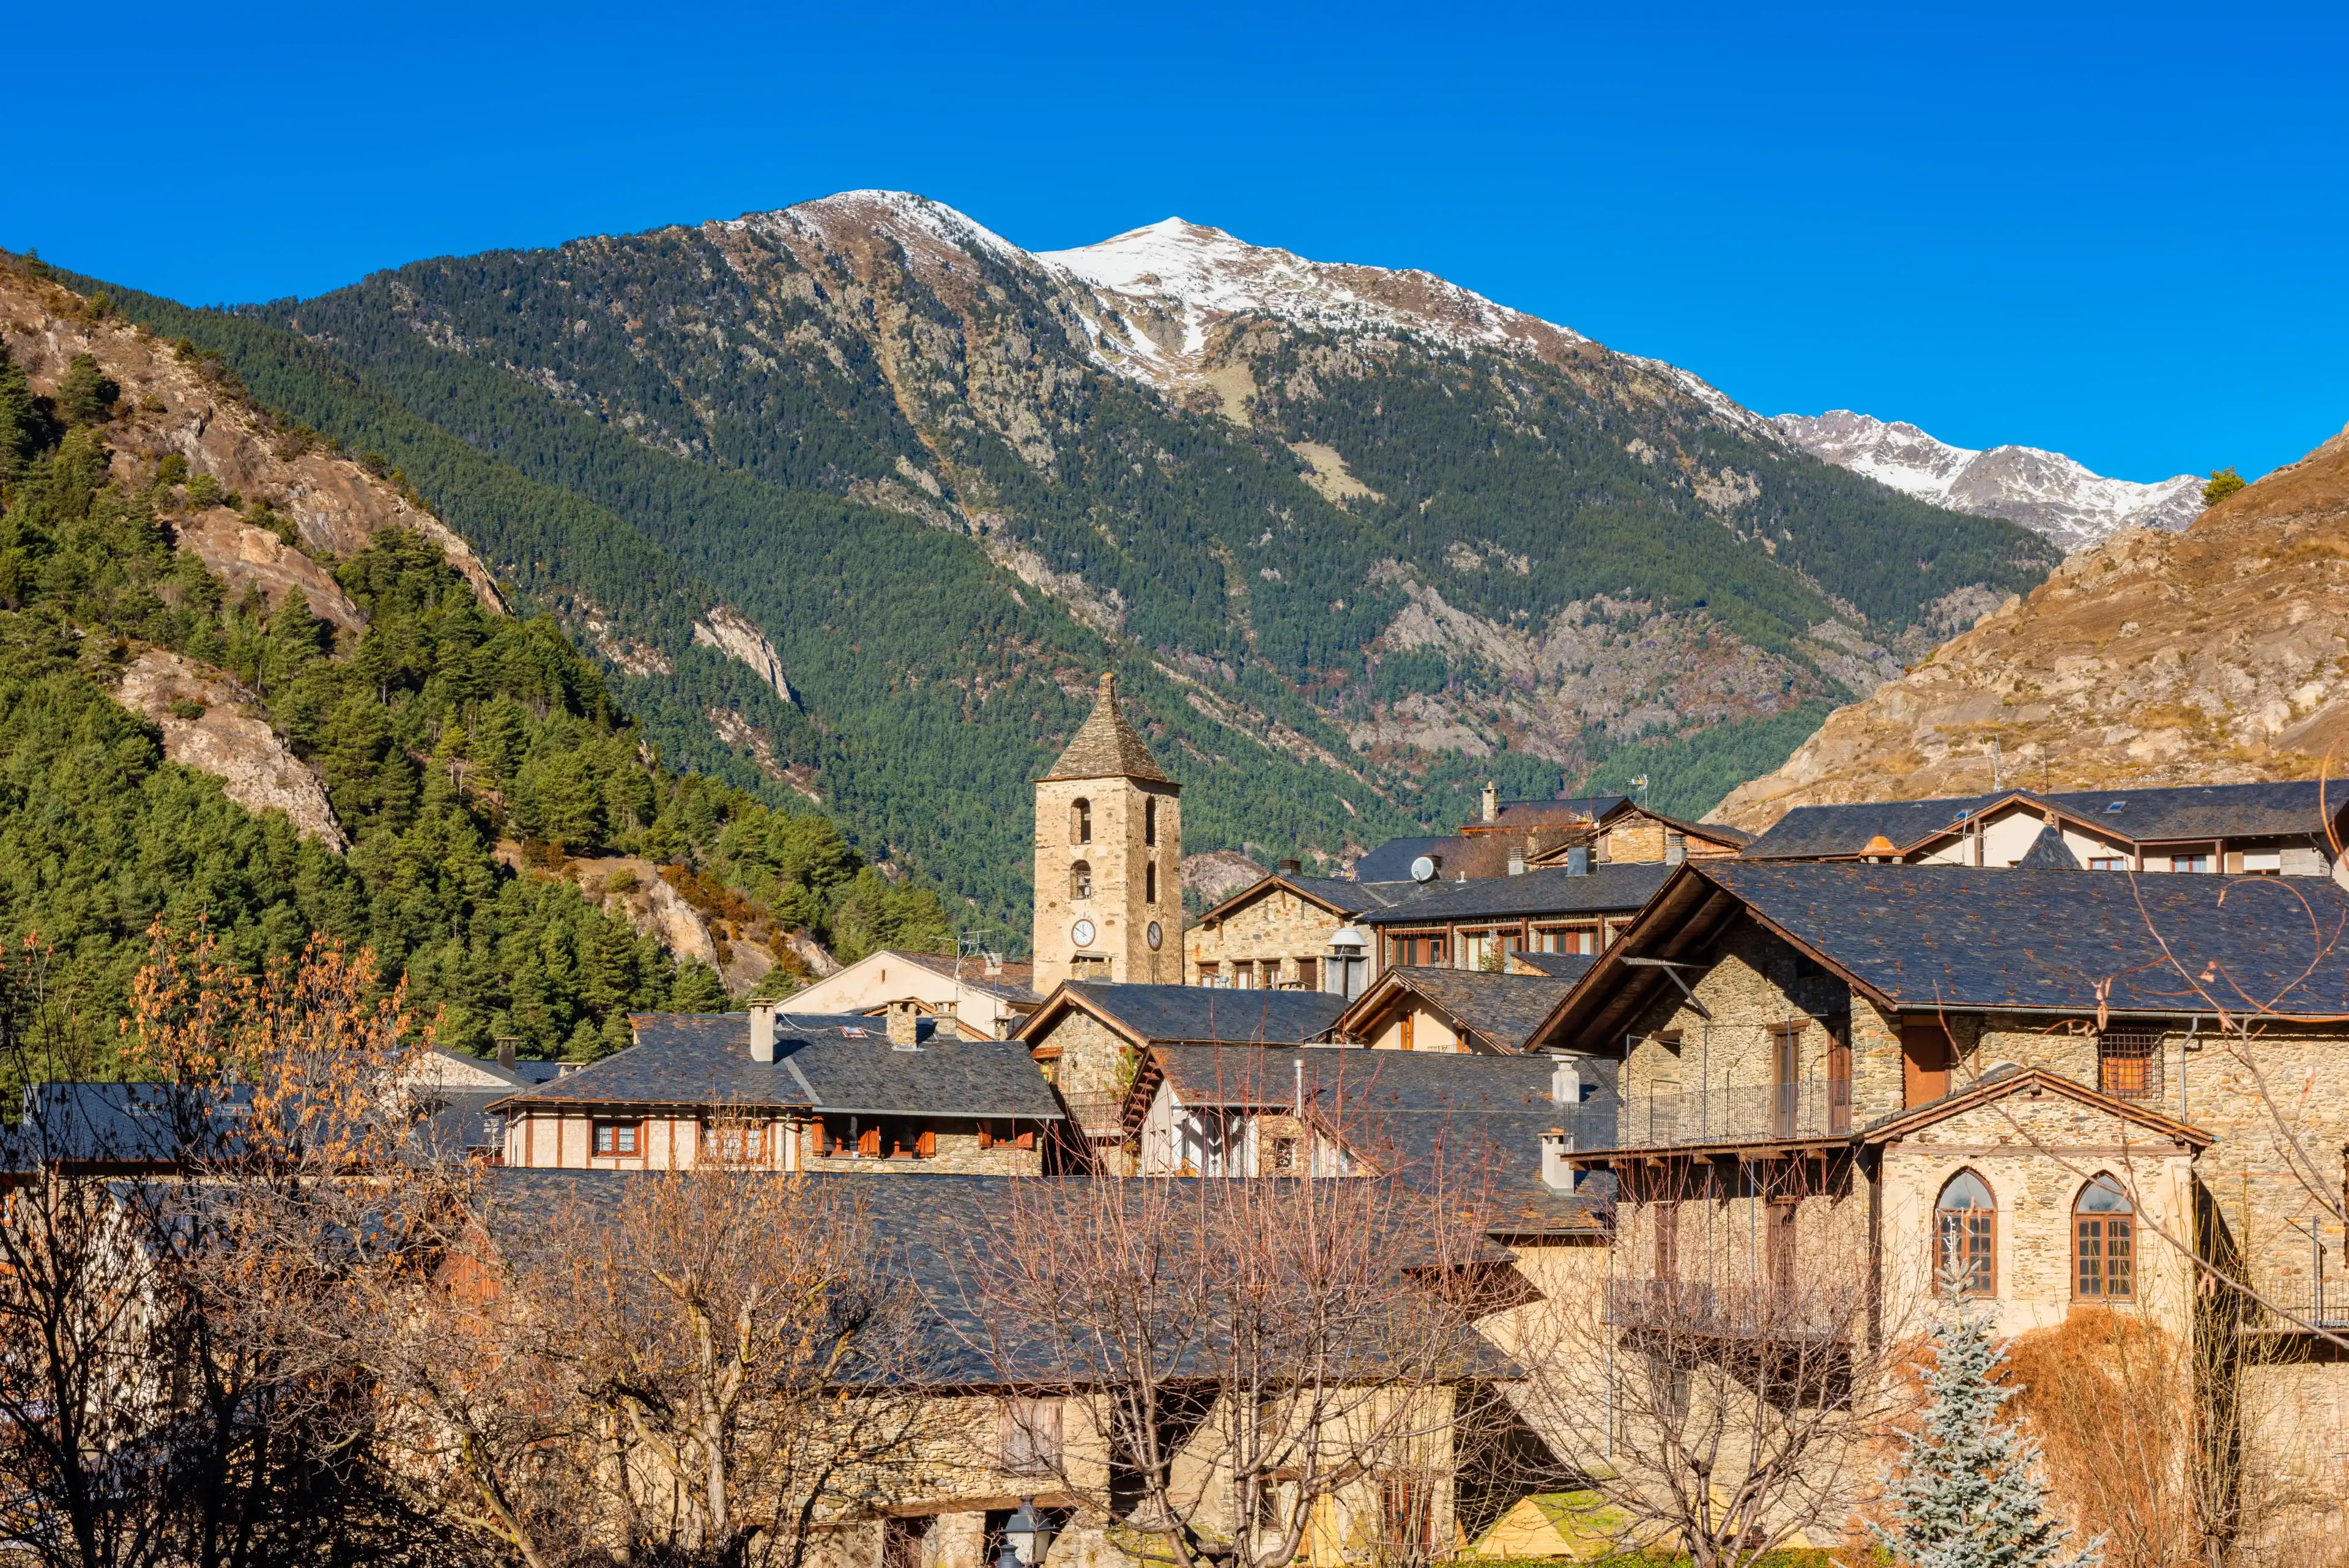 Best Ordino hotels. Cheap hotels in Ordino, Andorra